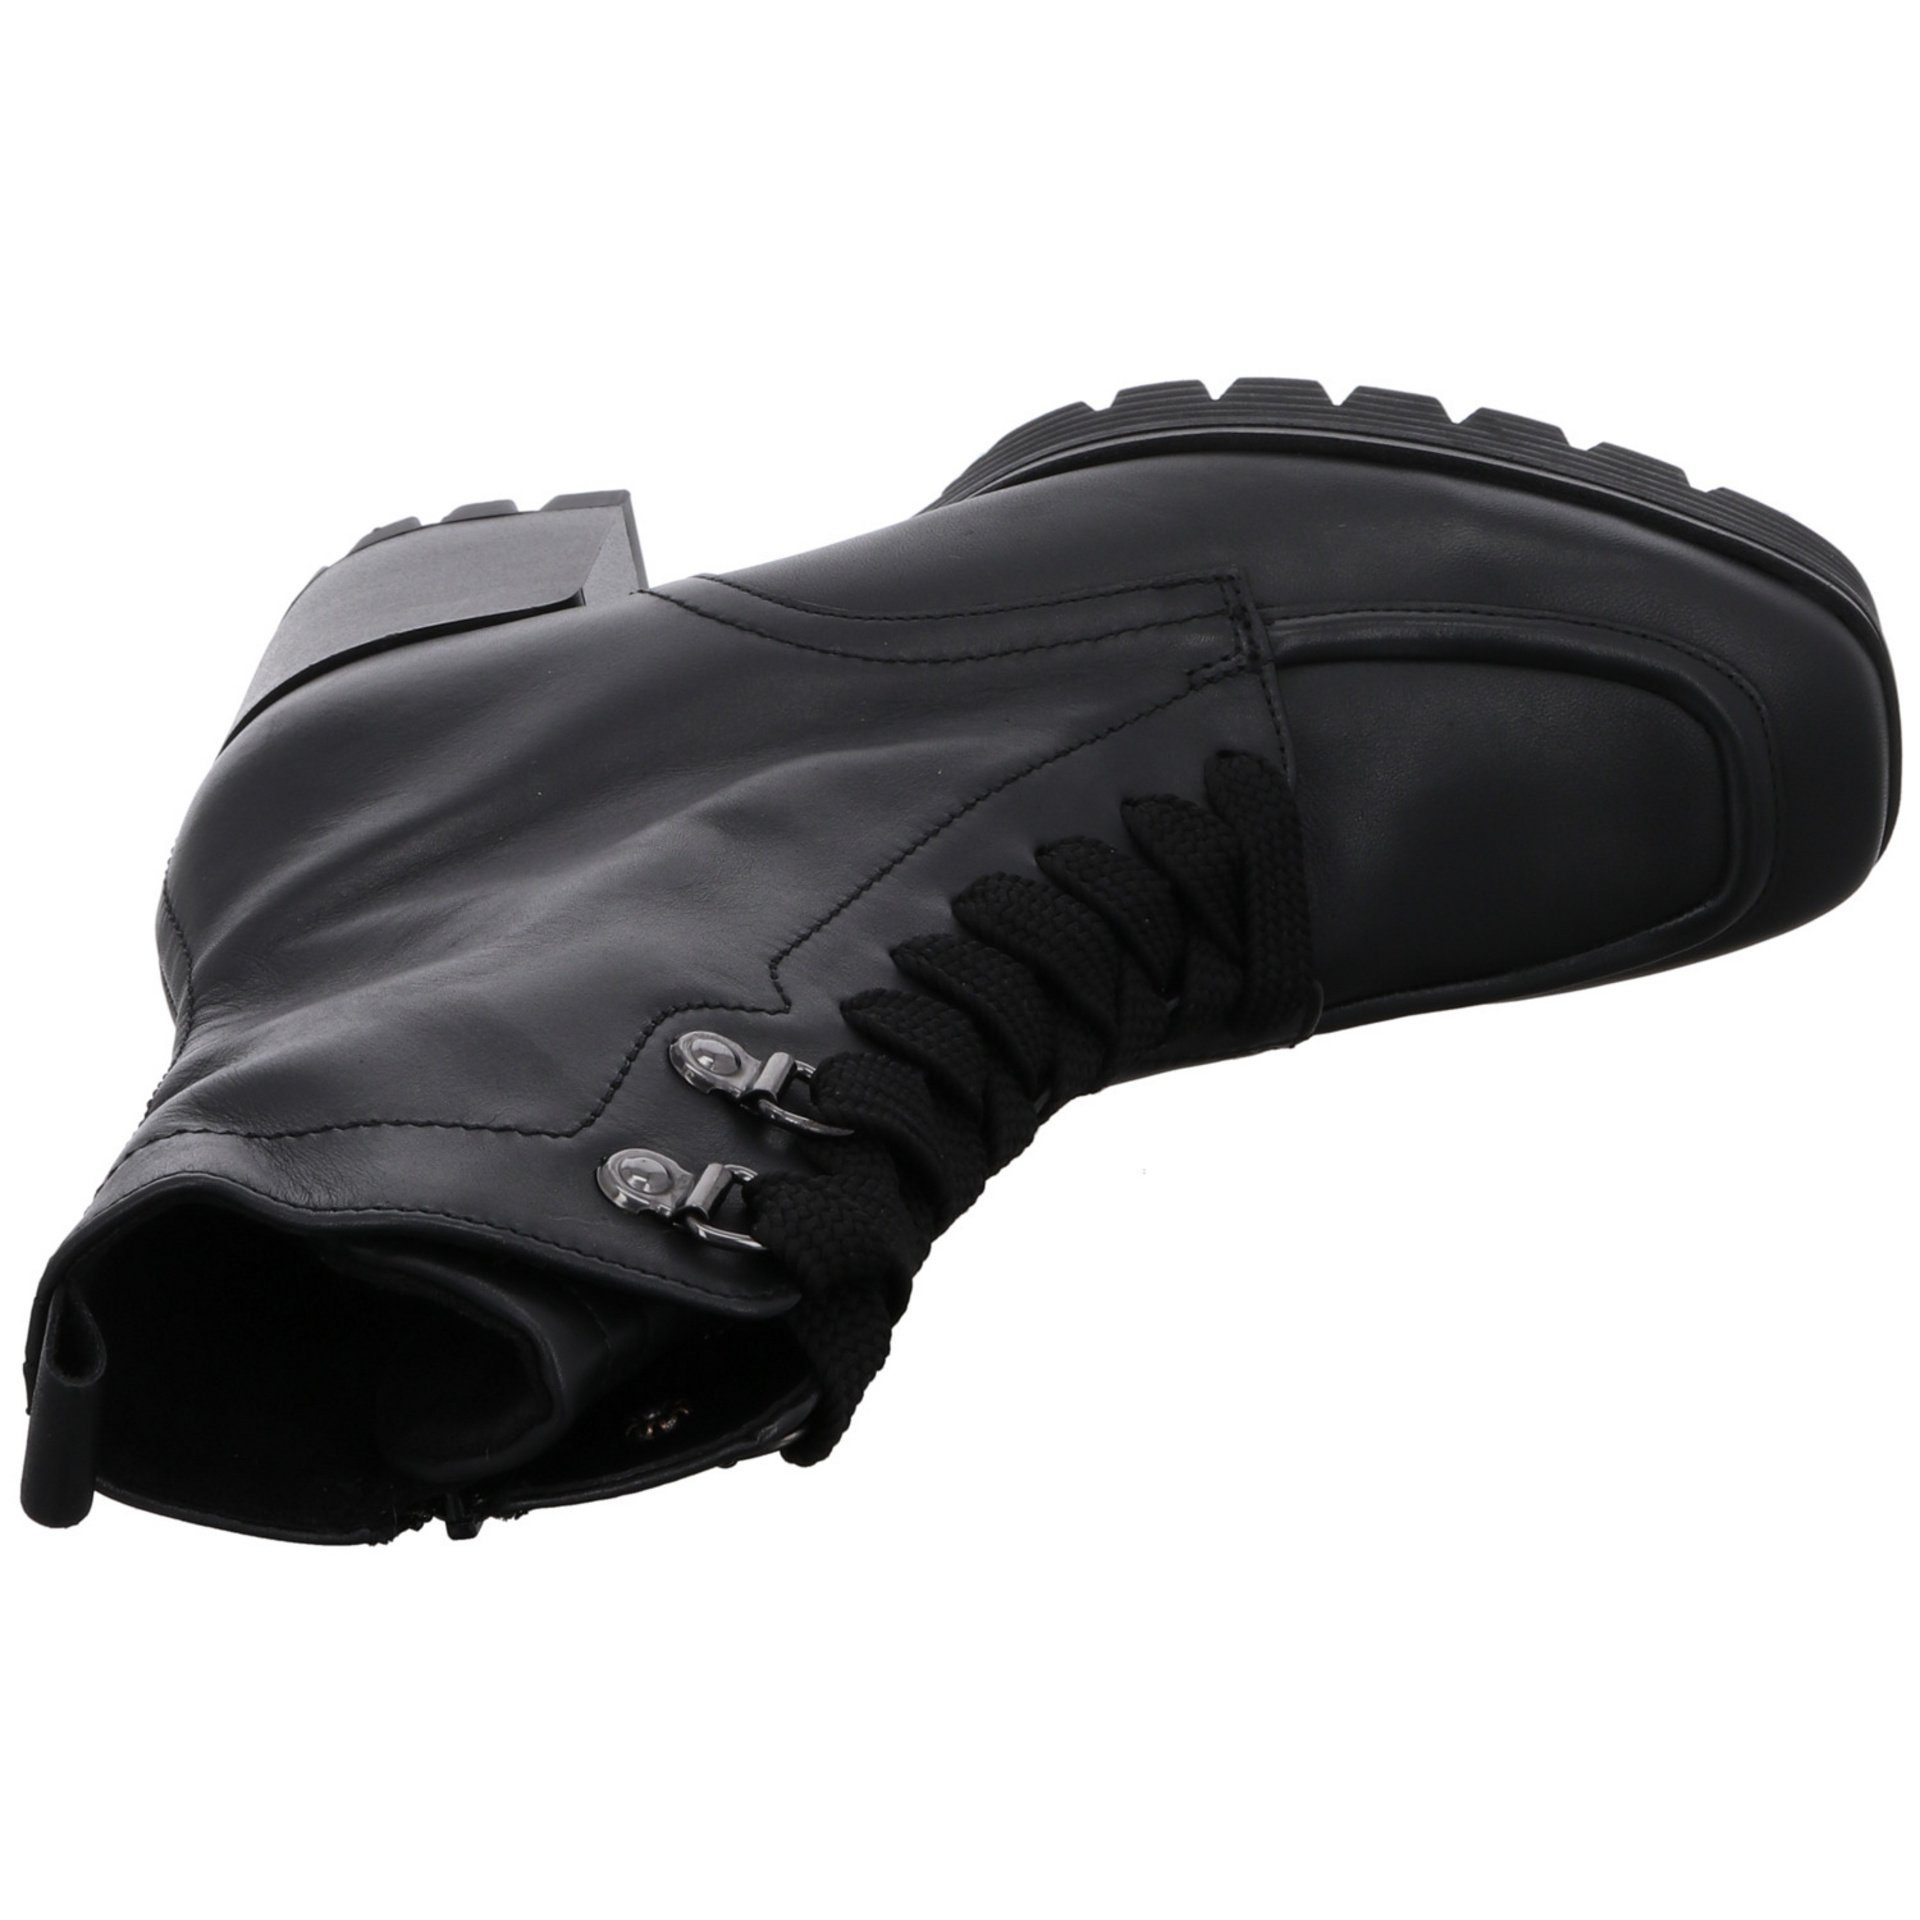 Gabor Damen Stiefeletten Schuhe Veloursleder Schnürstiefelette (Micro) Schnürstiefelette schwarz